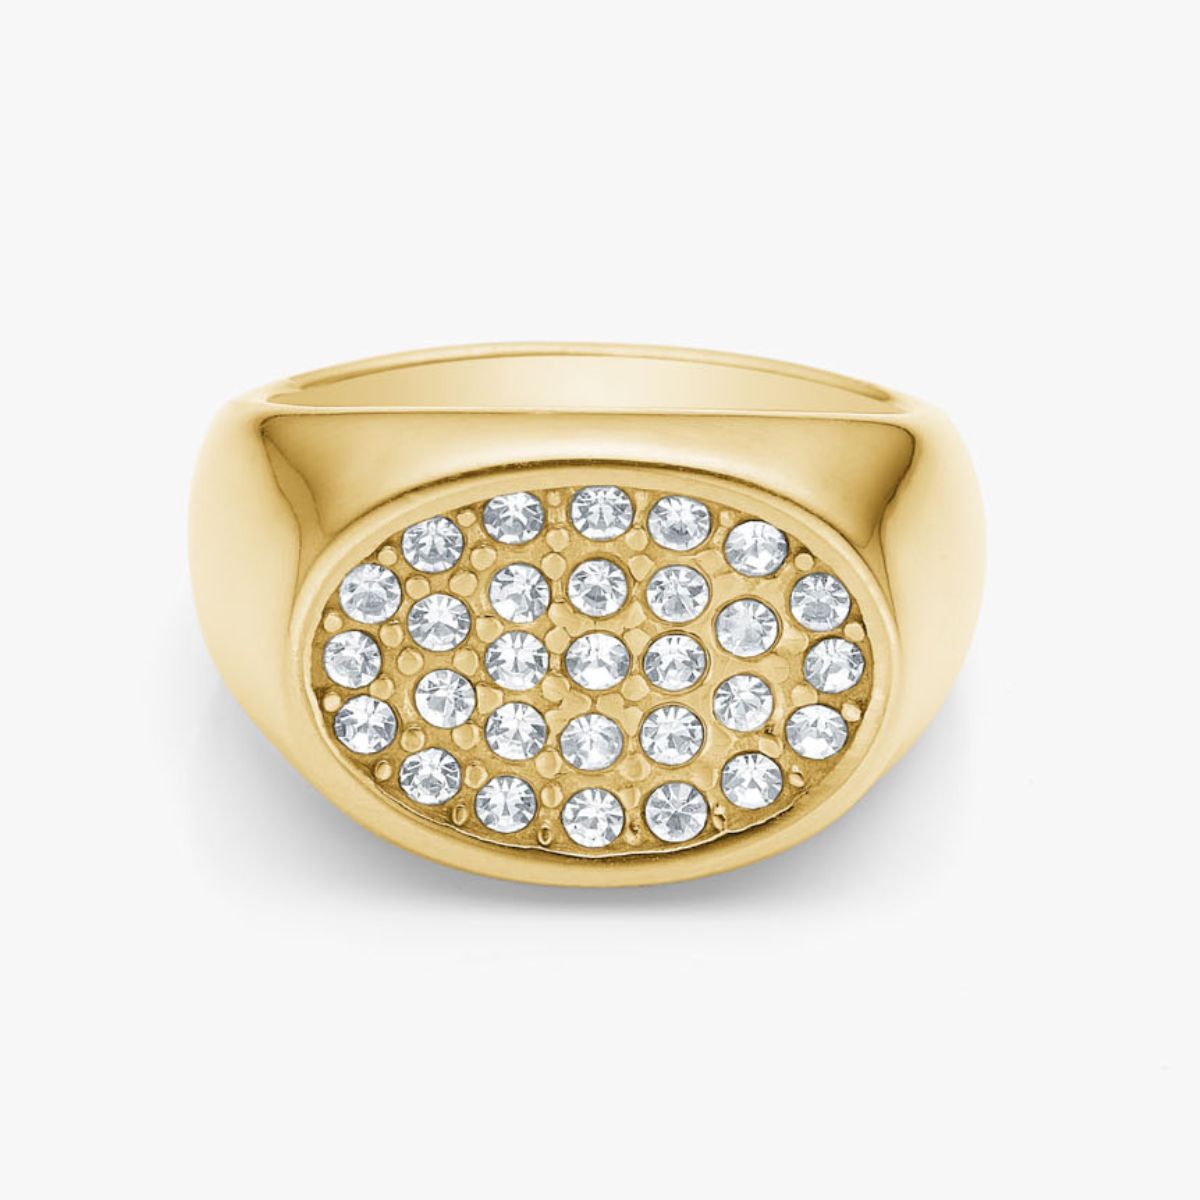 Camilla Krøyer Jewellery Oval Pavé Krystal Signet Ring 18K guldbelagt